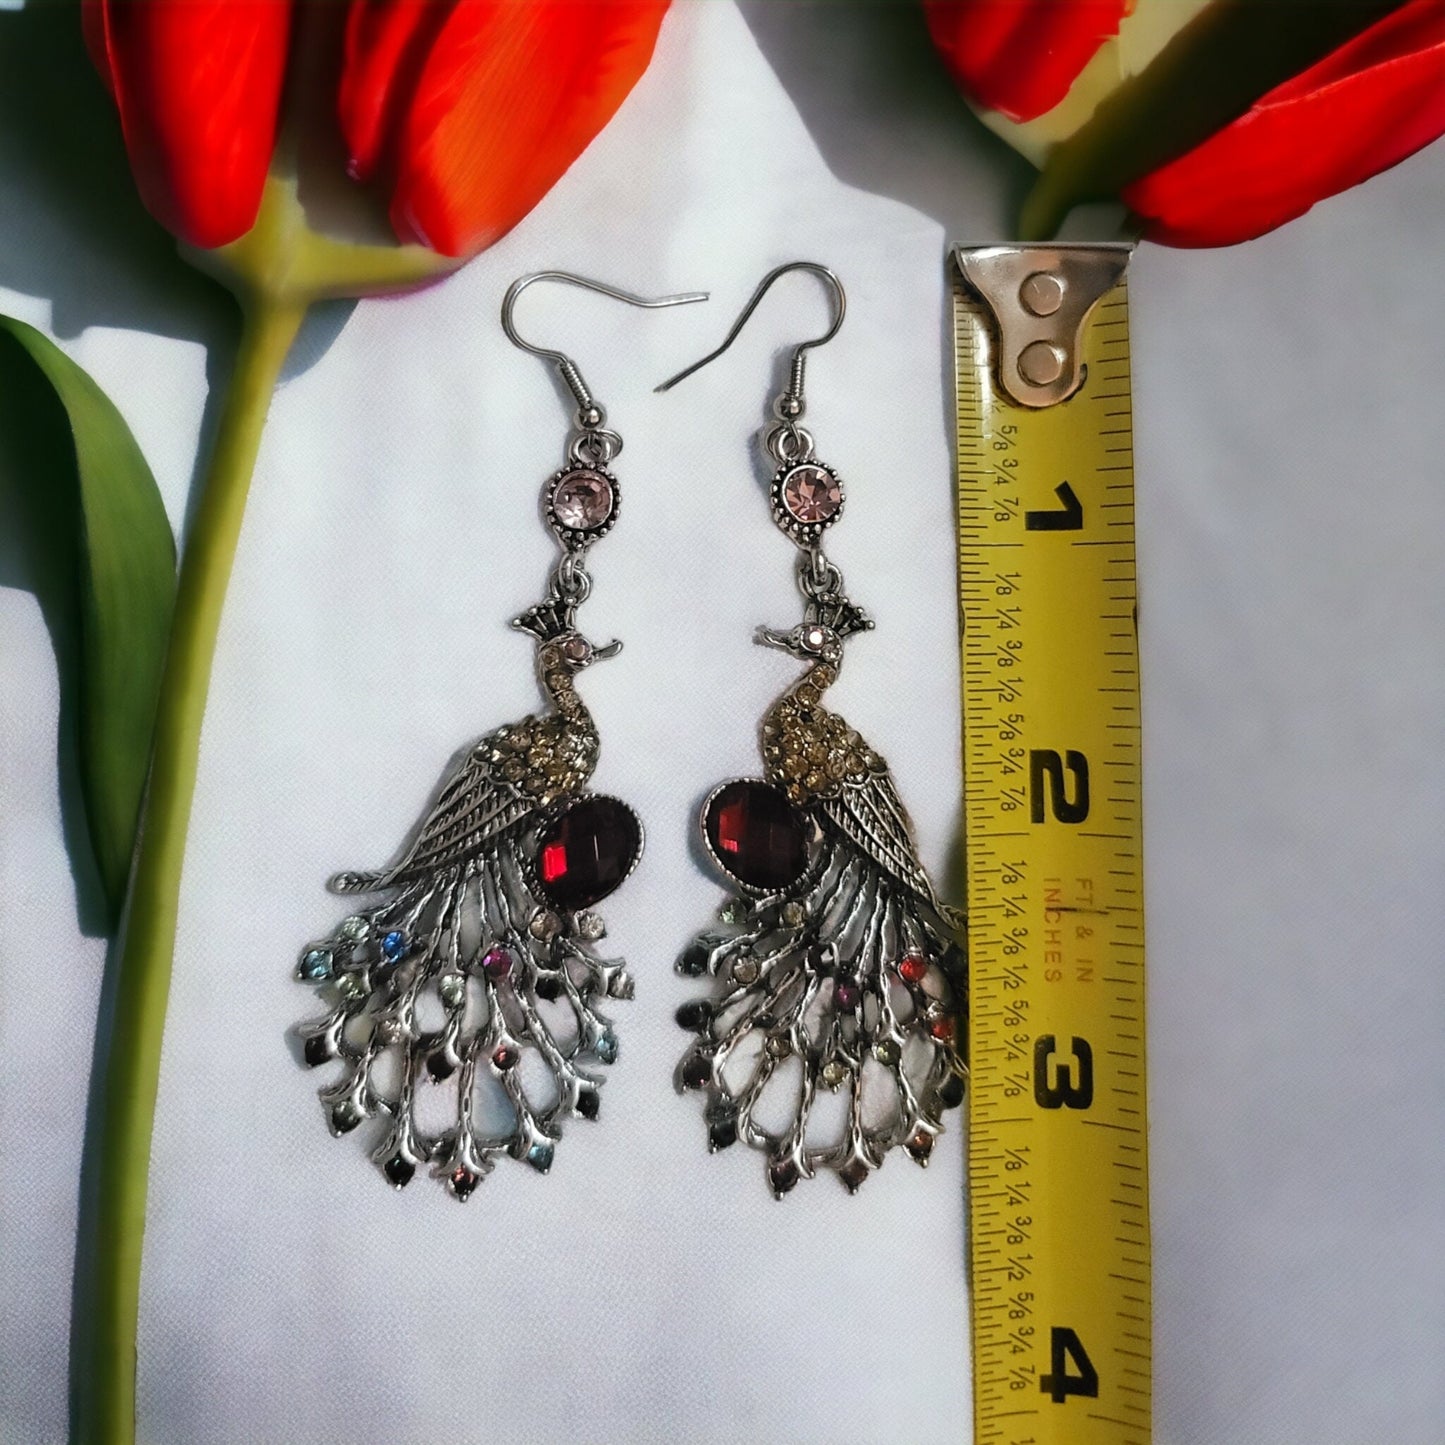 Multi color peacock rhinestone earrings silver dangle hook